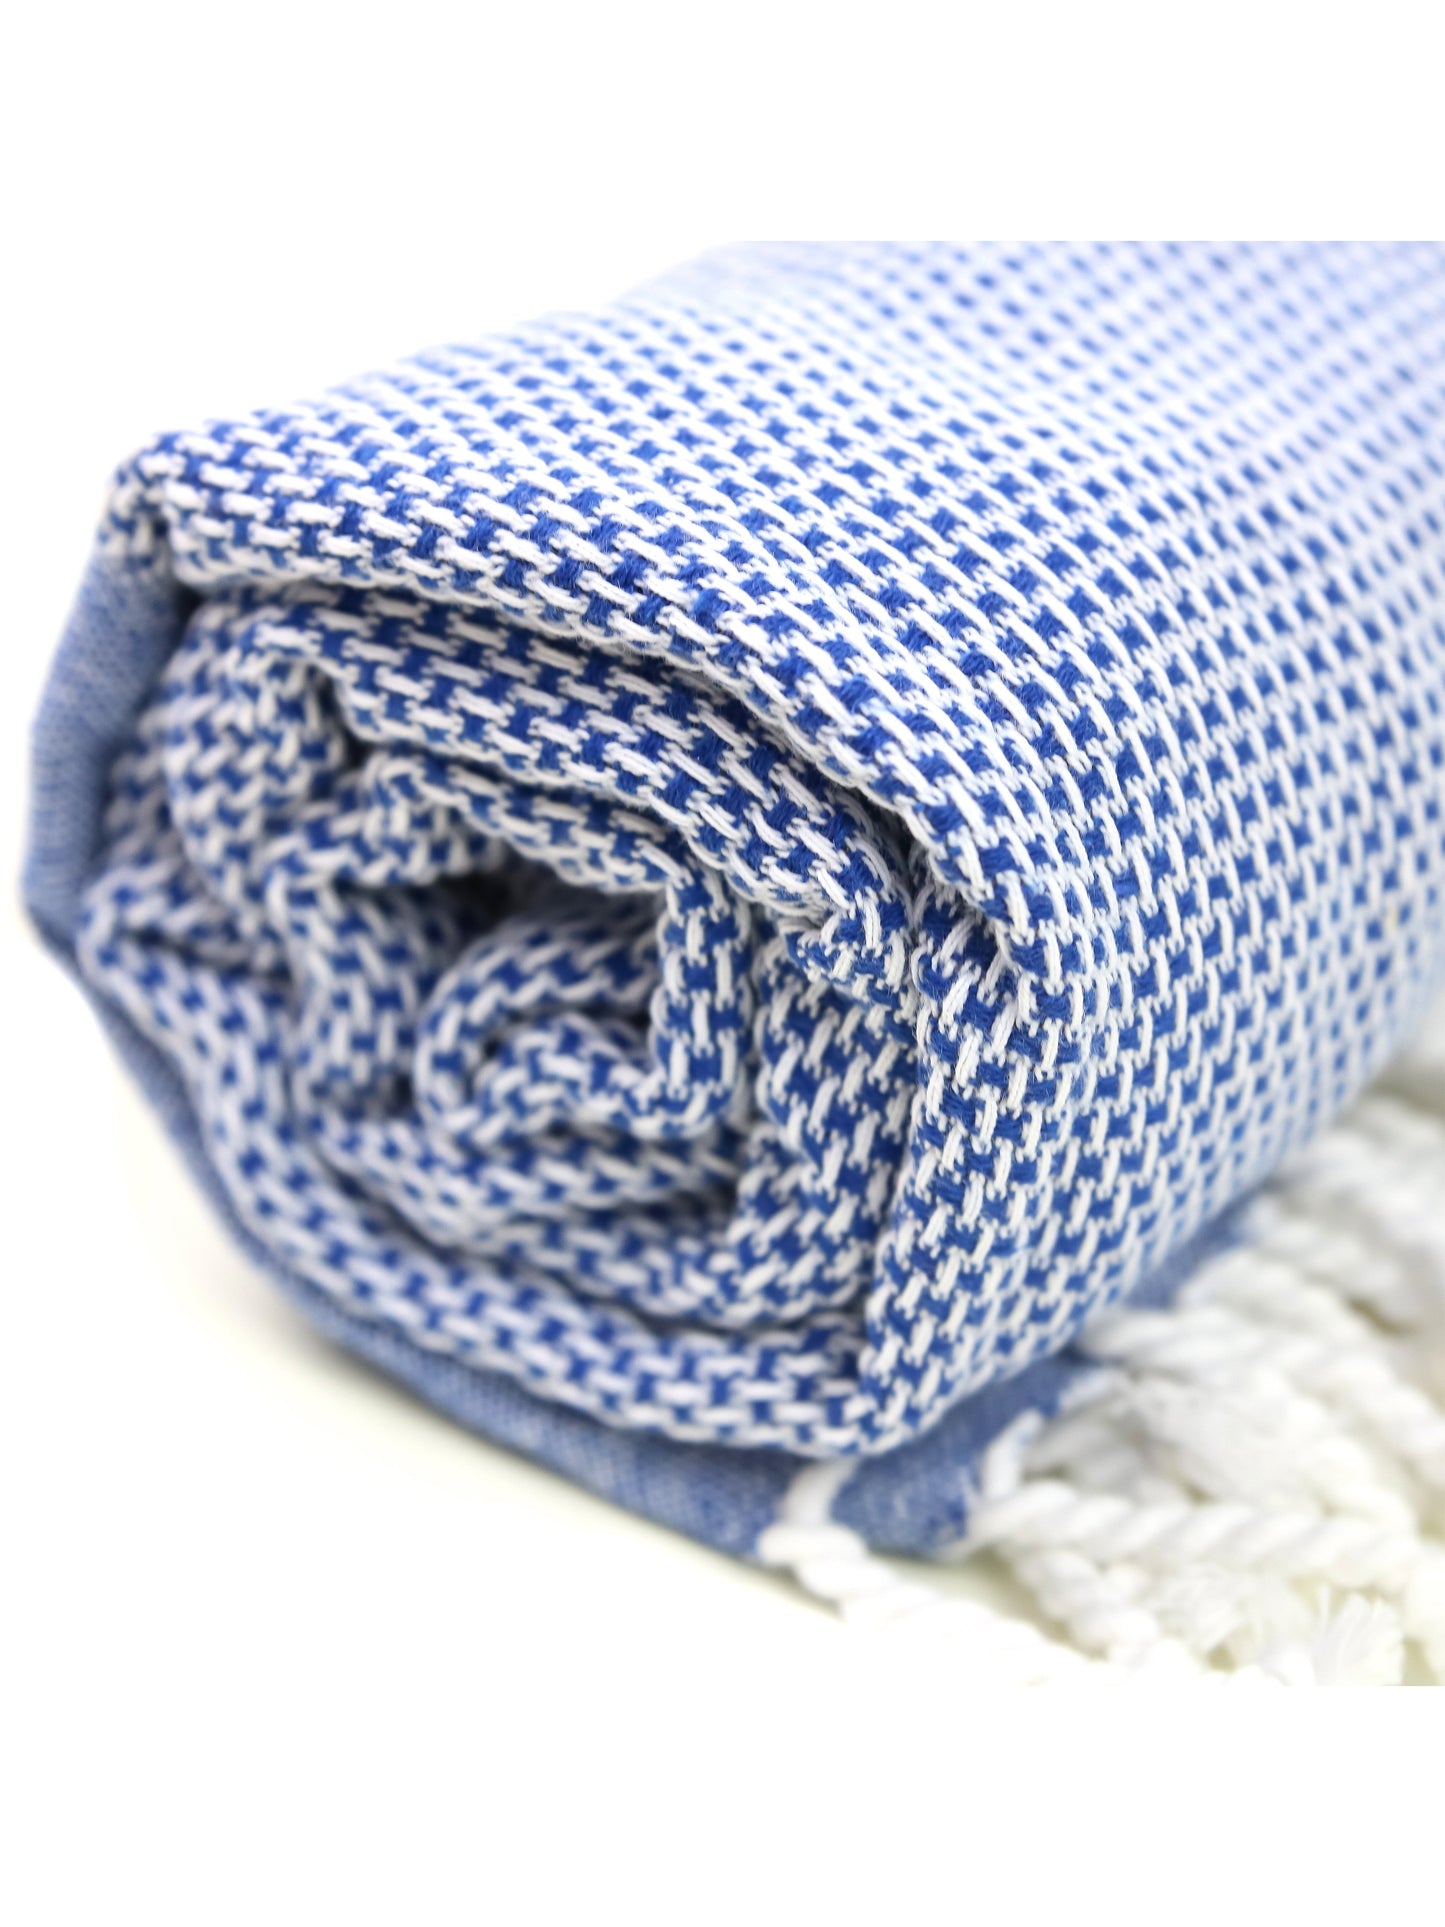 Sunkissed Antalya Towel
Jungle Pillows